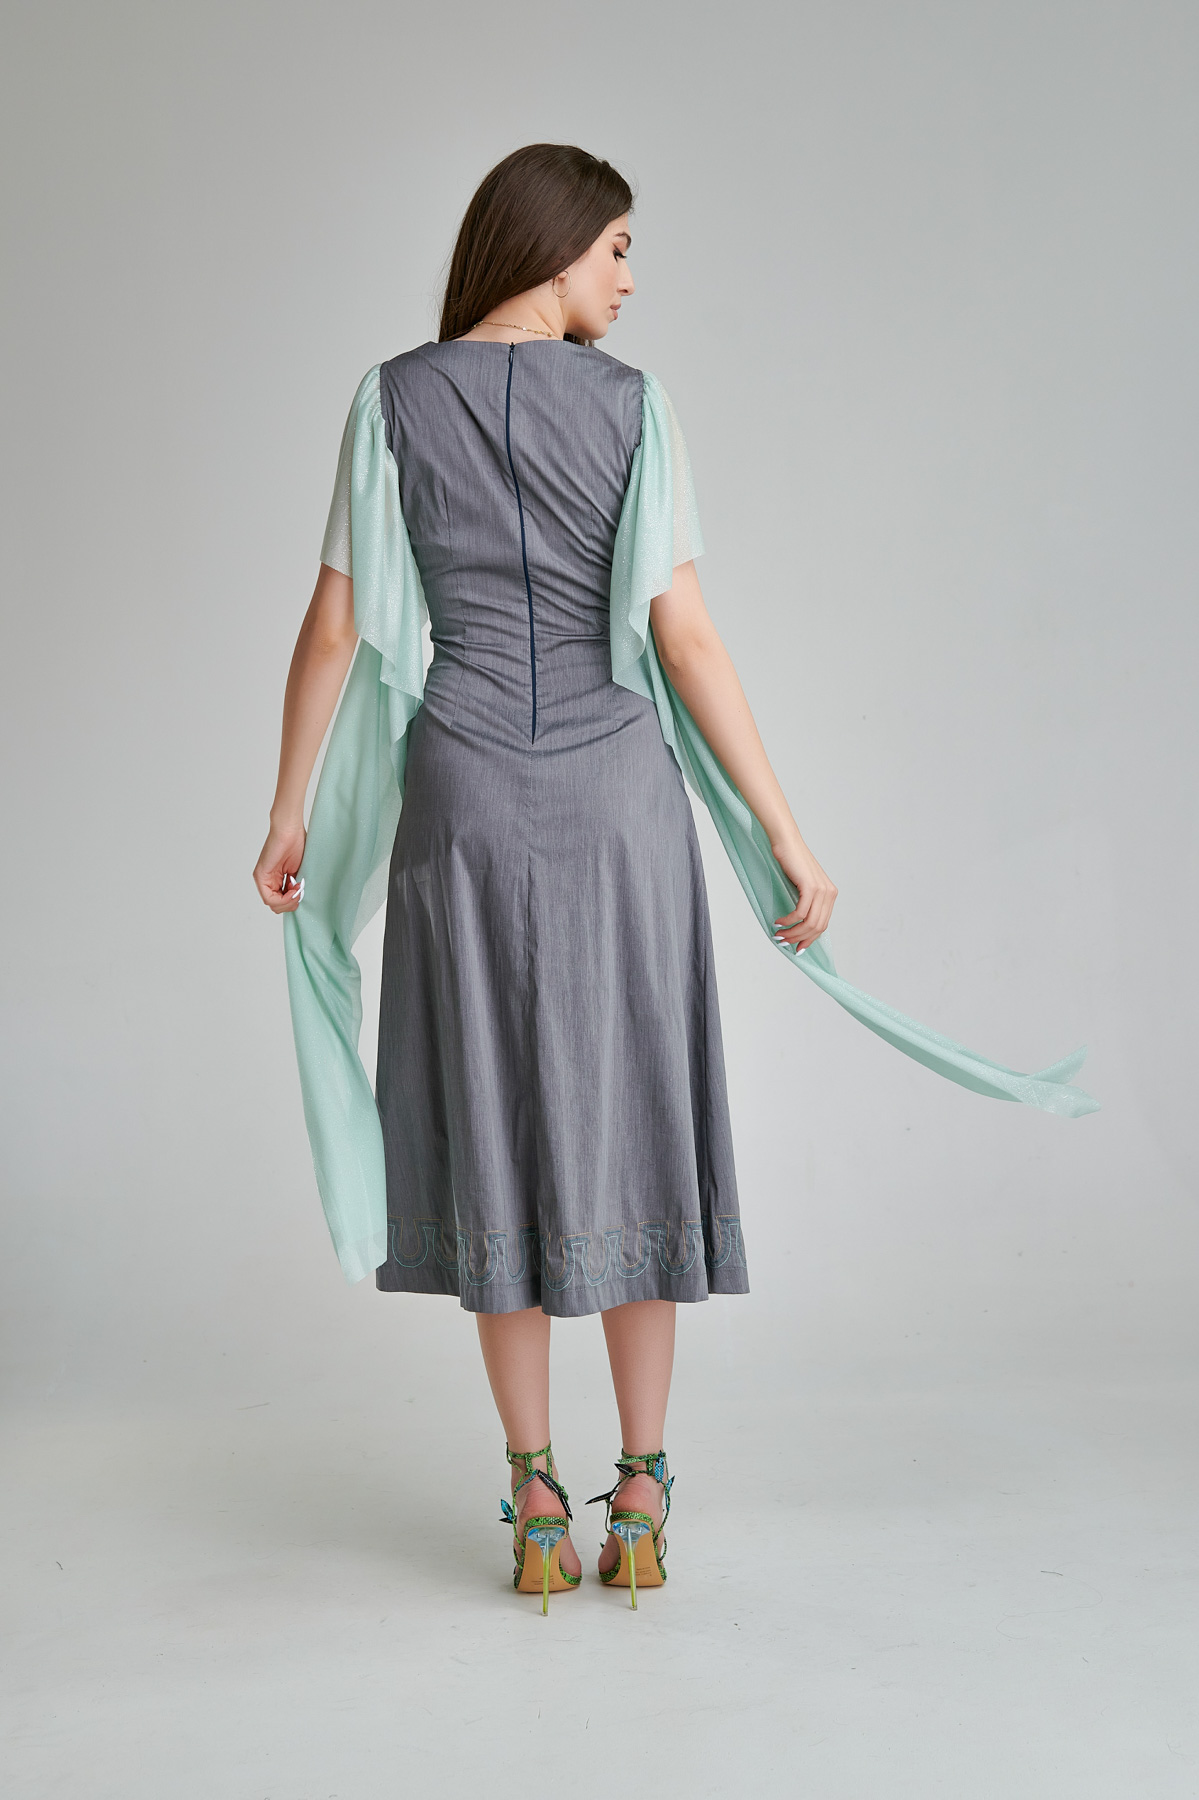 KAFTA poplin casual dress with long butterfly sleeves. Natural fabrics, original design, handmade embroidery